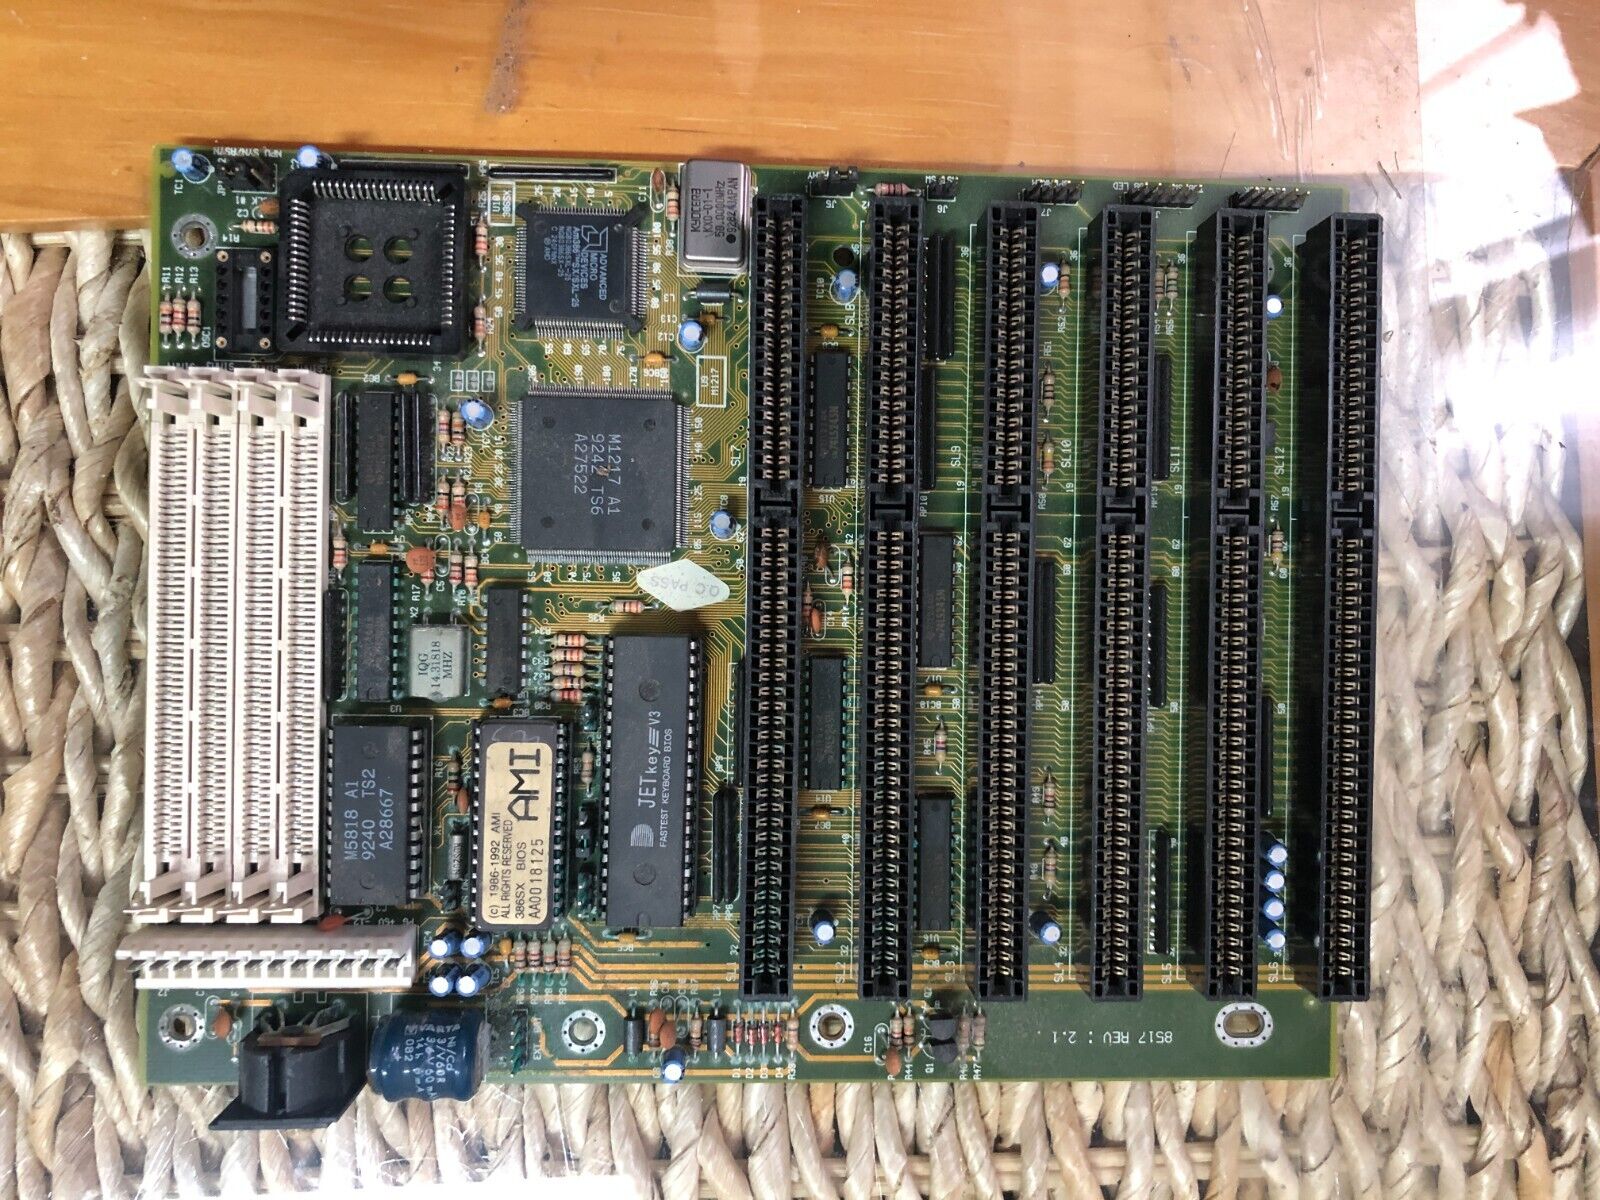 1x 386 motherboard 8517 REV 2.1  - AMD386 SX/SXL 25